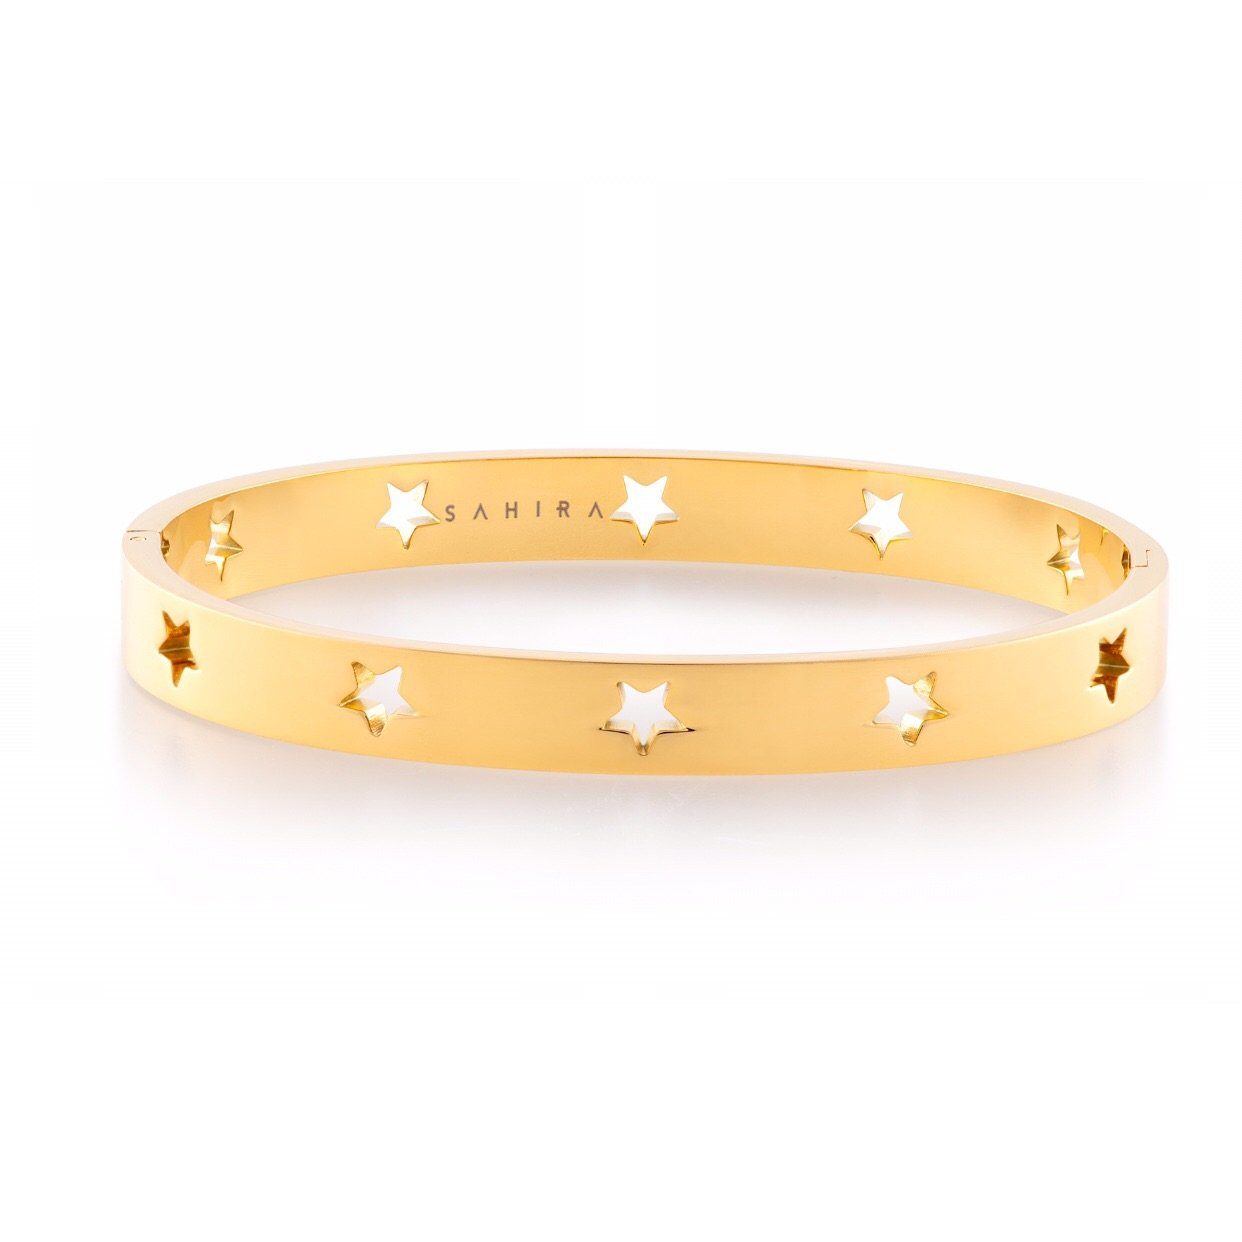 star jewellery - Hairy Growler - hand cut silver coin star bracelet